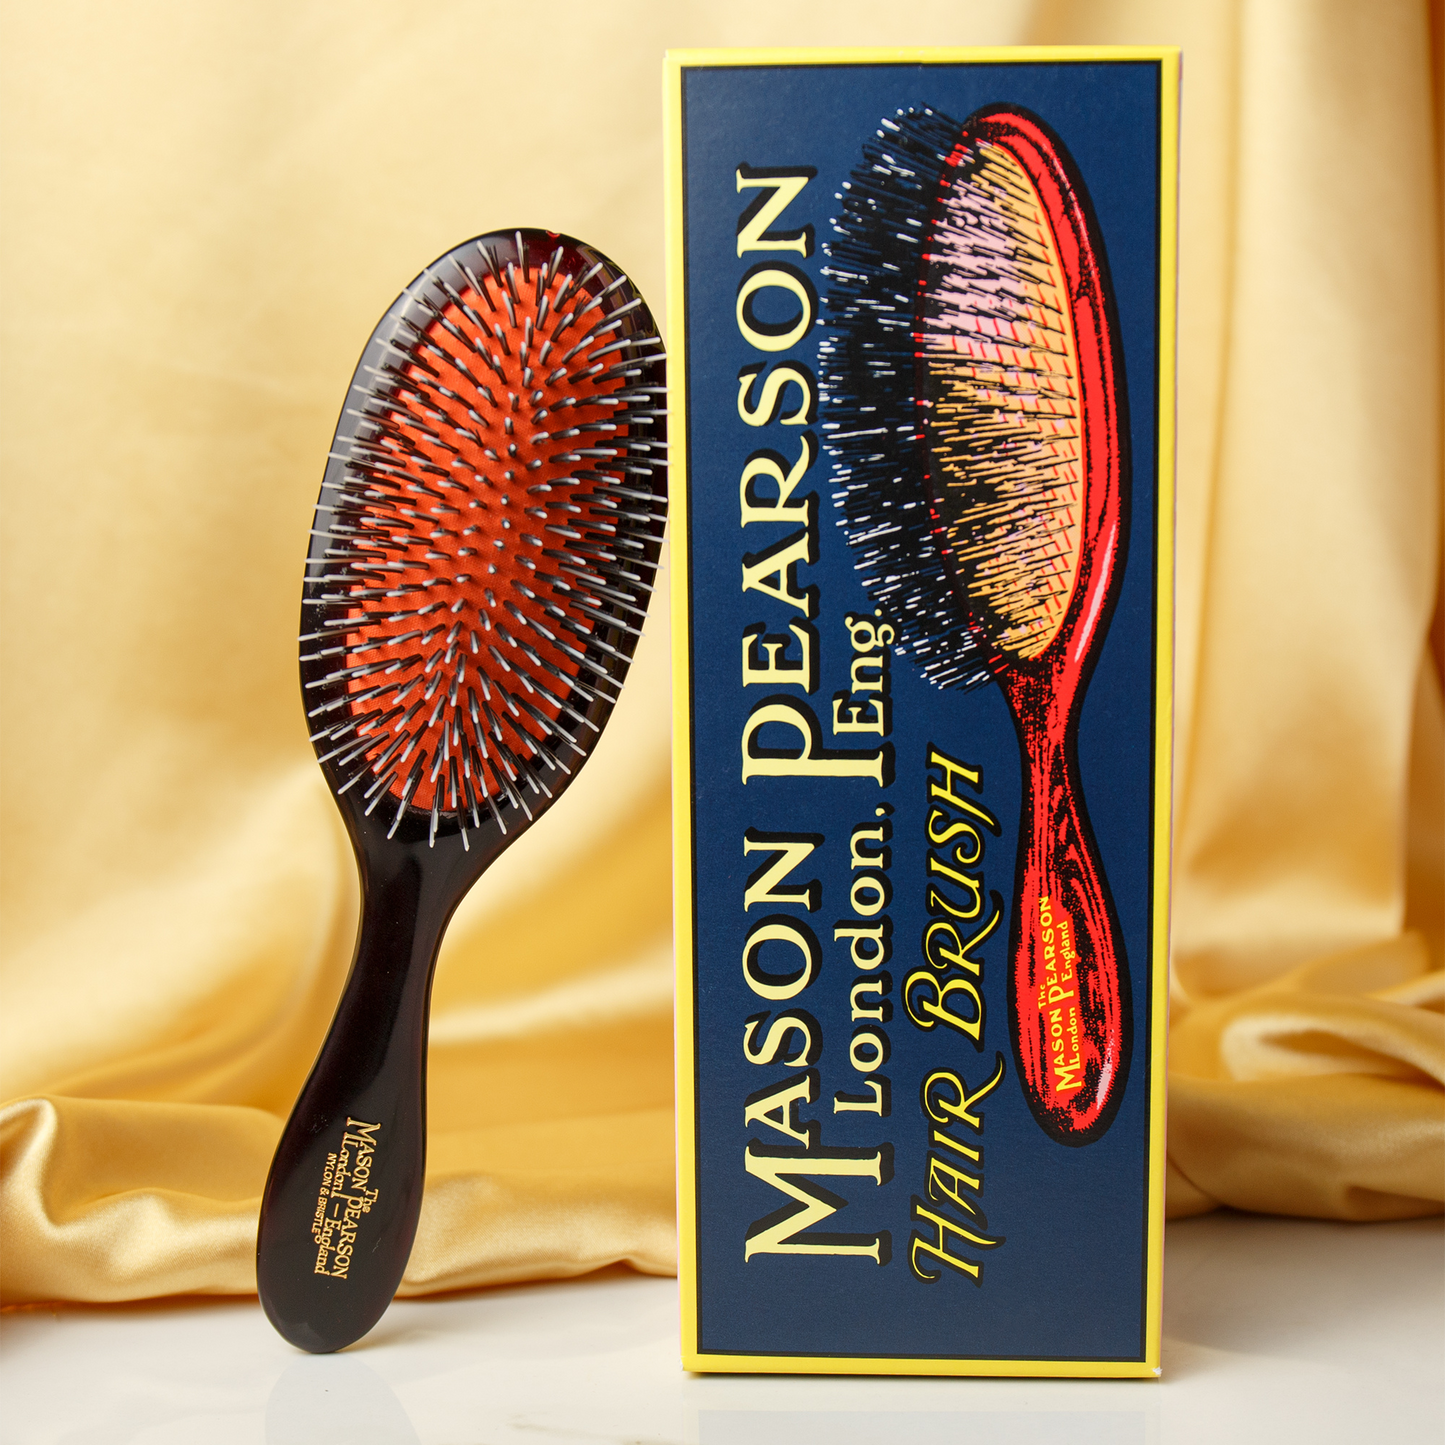 Mason Pearson Handy Mixture Hair Brush 